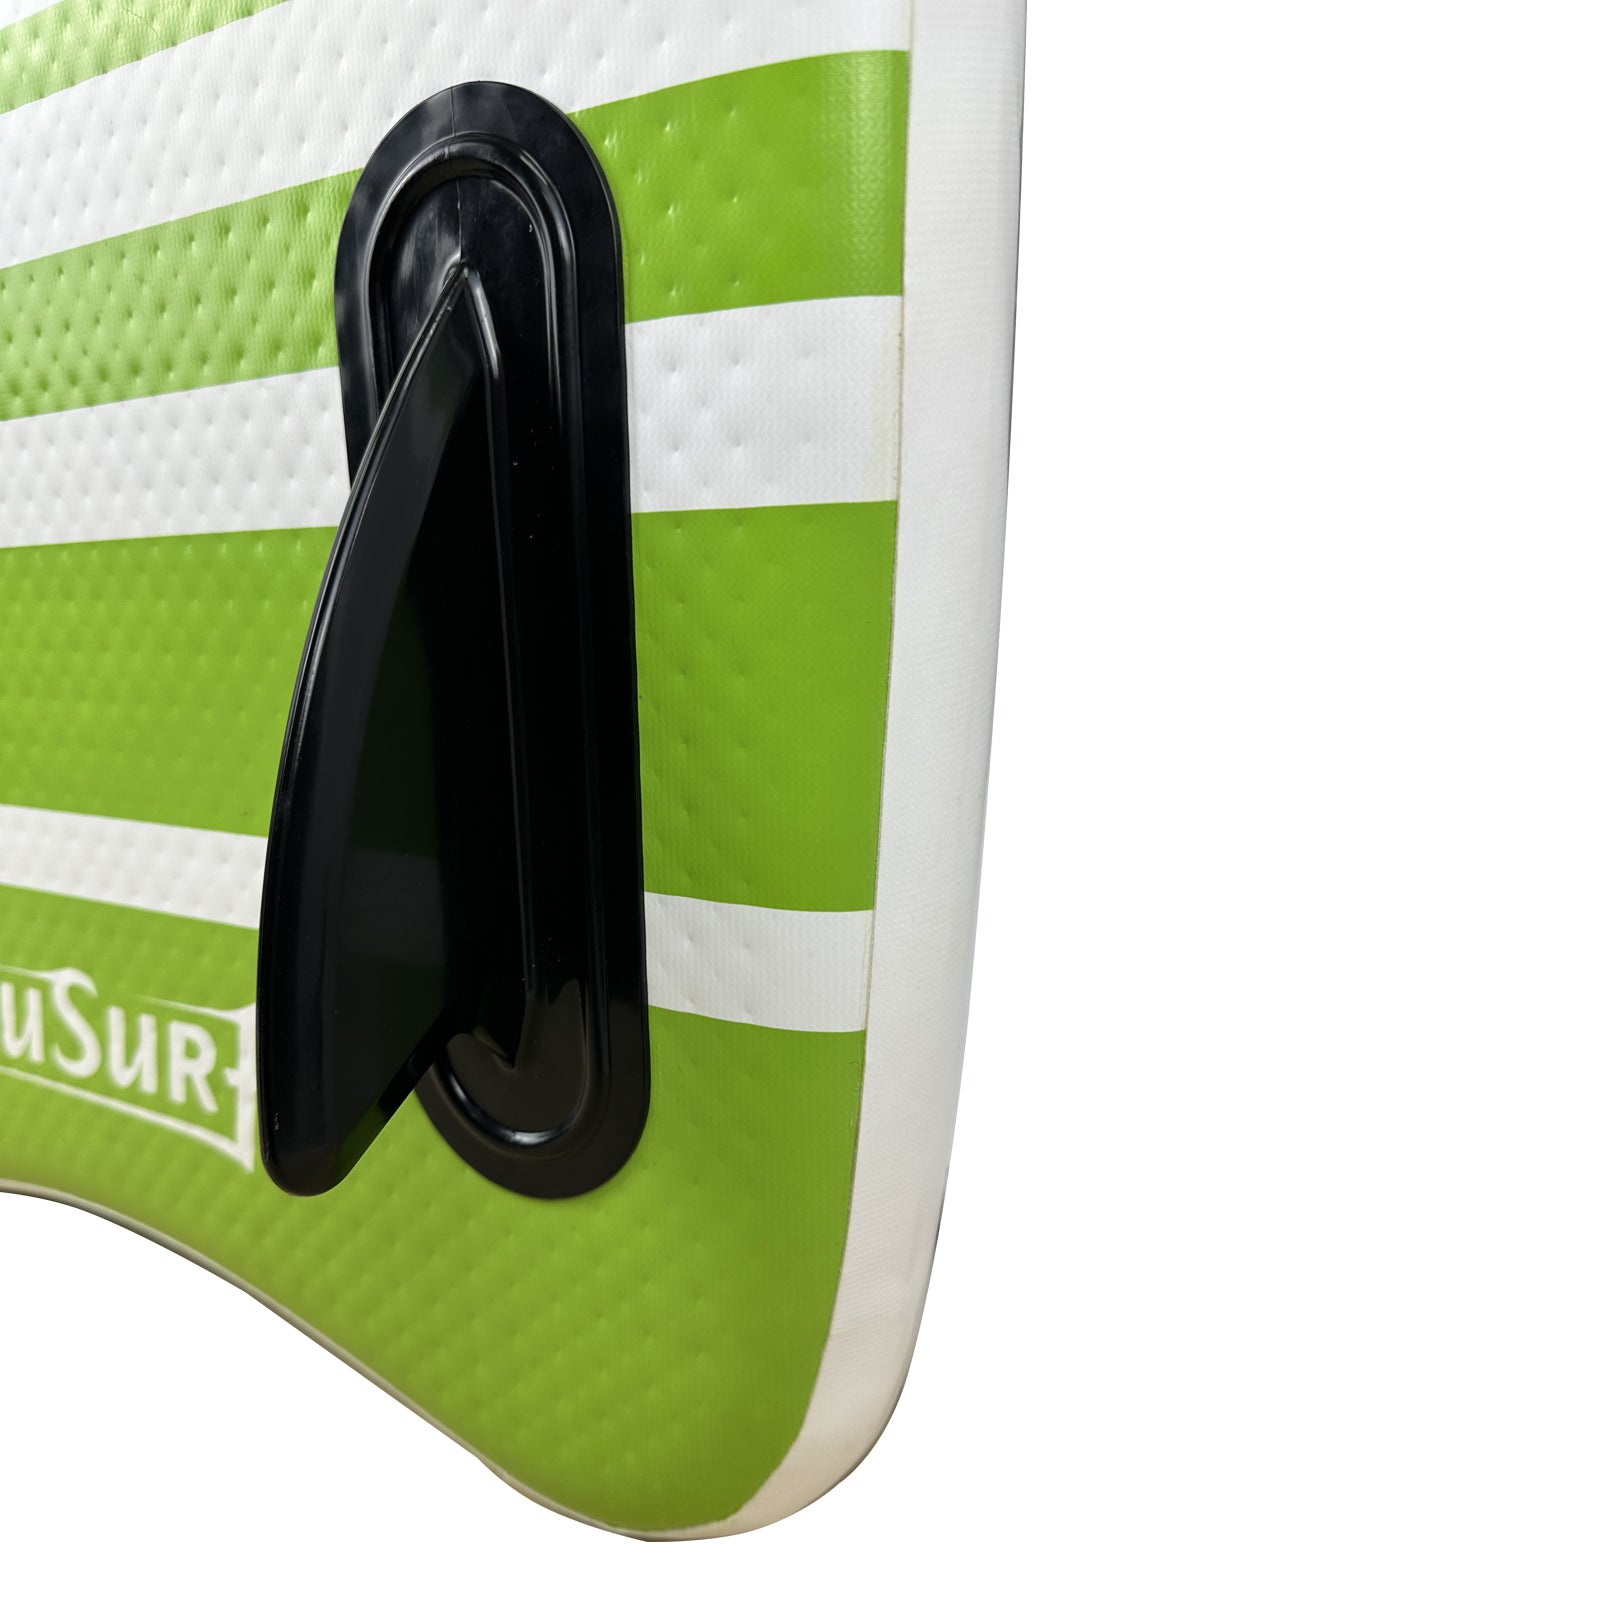 Bru Surf Inflatable Boogie Bodyboard –